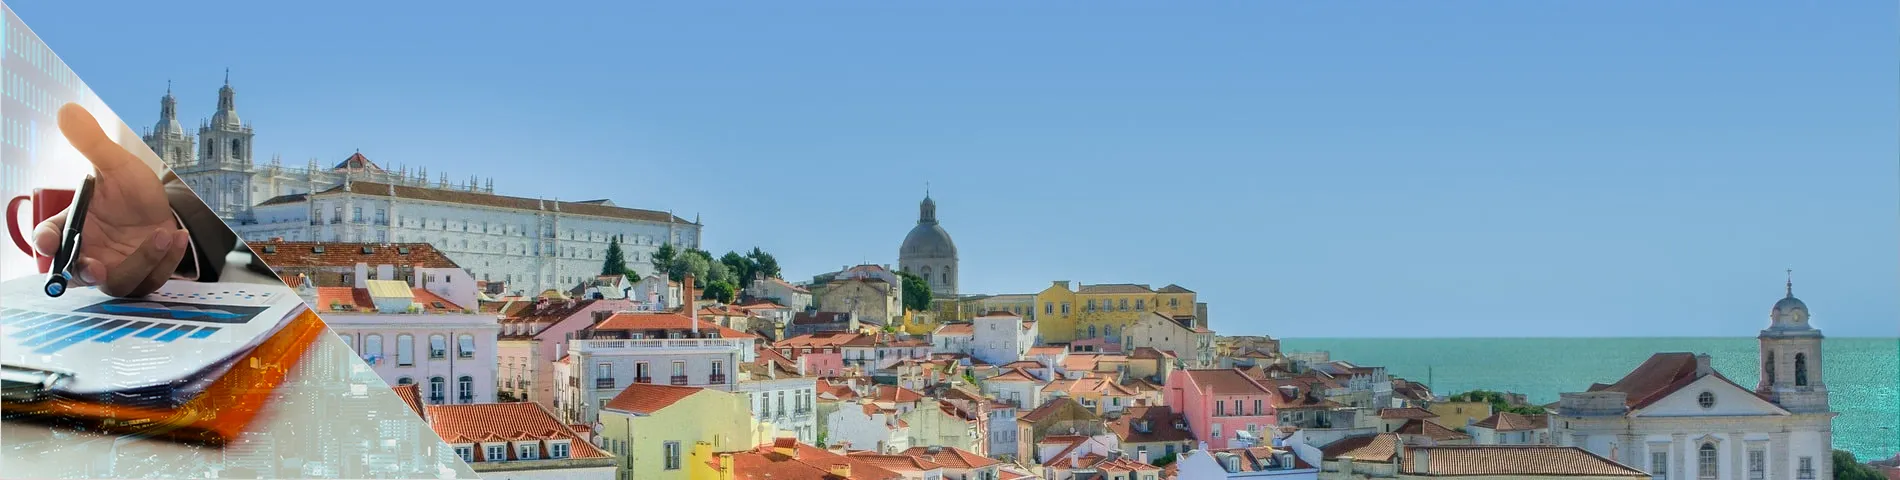 Lisbon - Banking & Finance